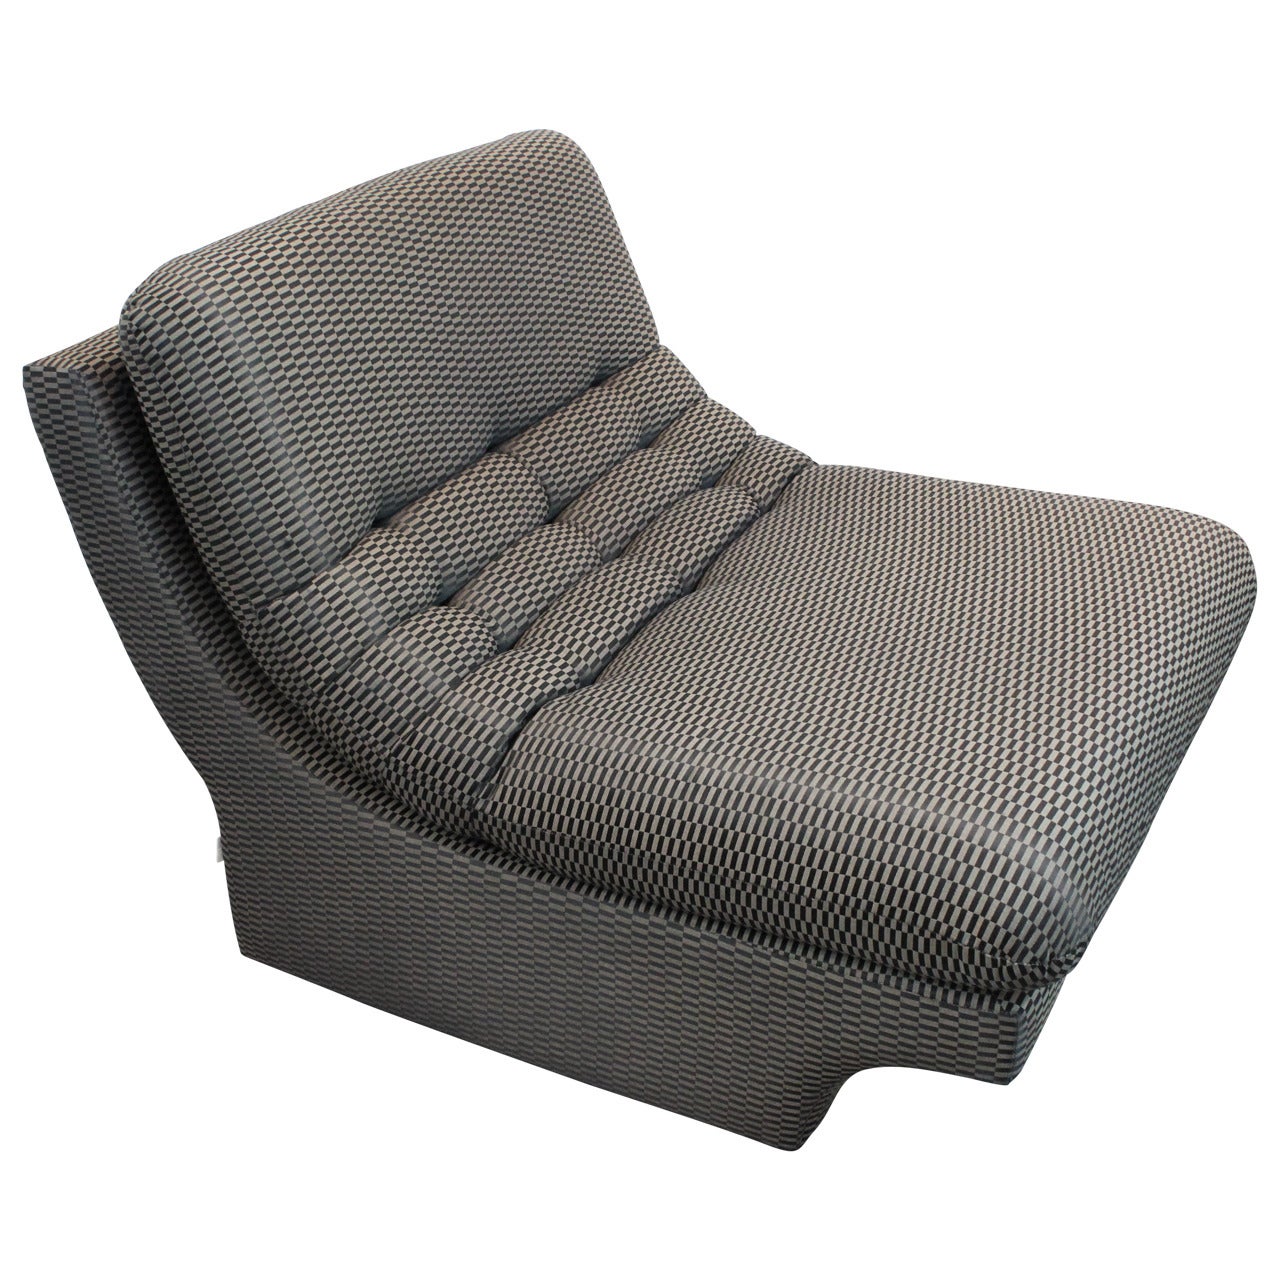 Kagan Lounge Chair For Sale